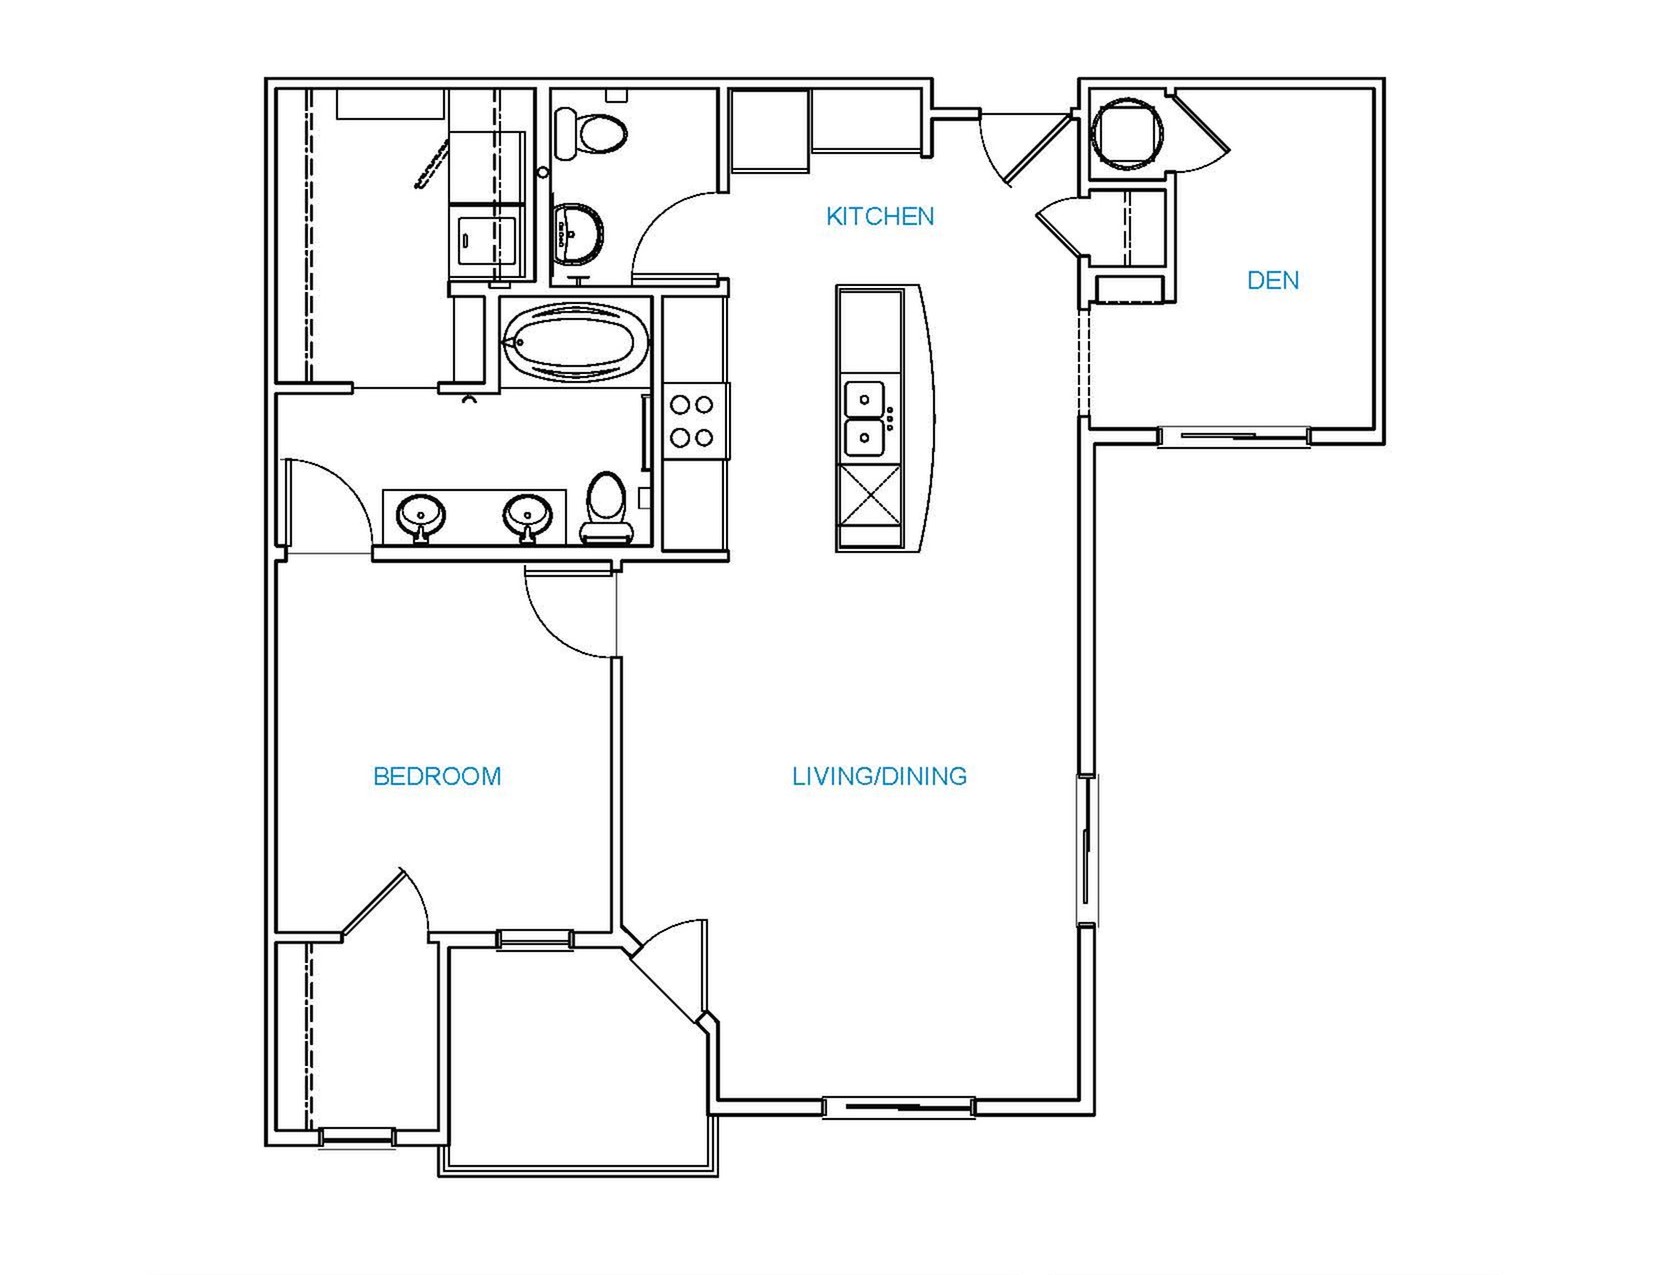 Floorplan - B2, 1 Bed, 1.5 Baths, 996 square feet